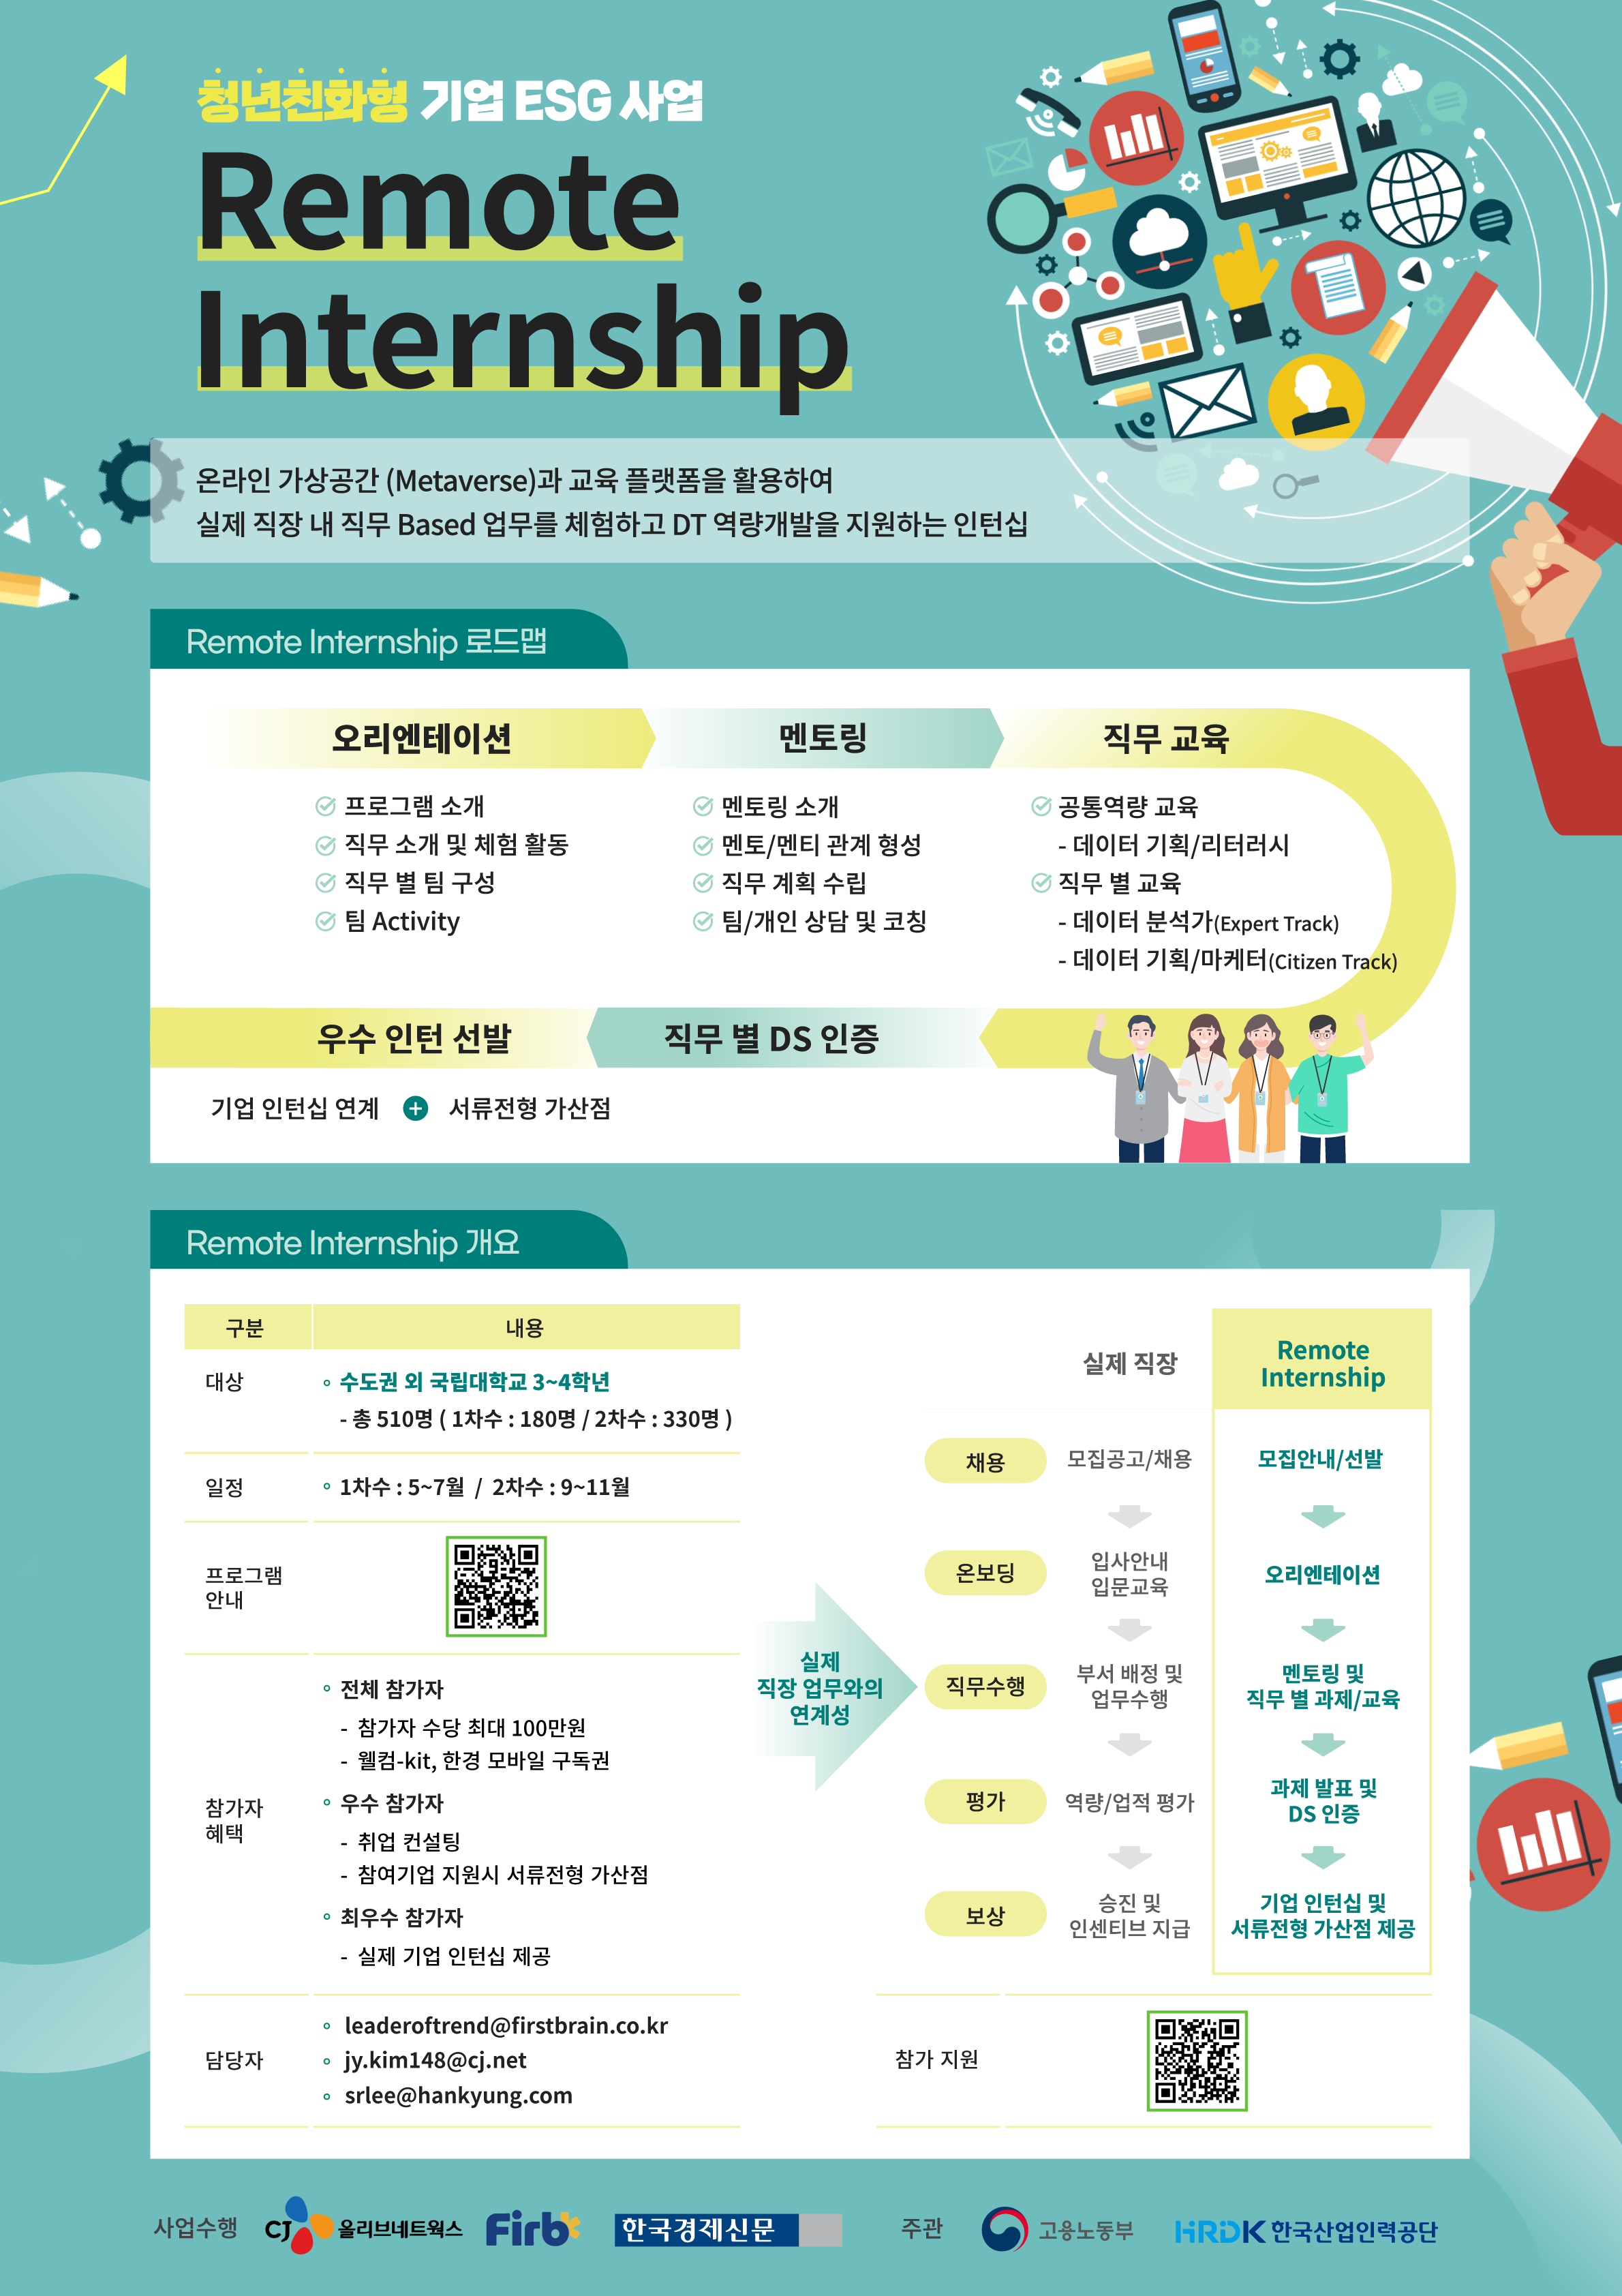 Remote Internship 포스터.png : [Remote Internship 공고] 부산대학교 재학생(3~4학년) 및 졸업생 대상